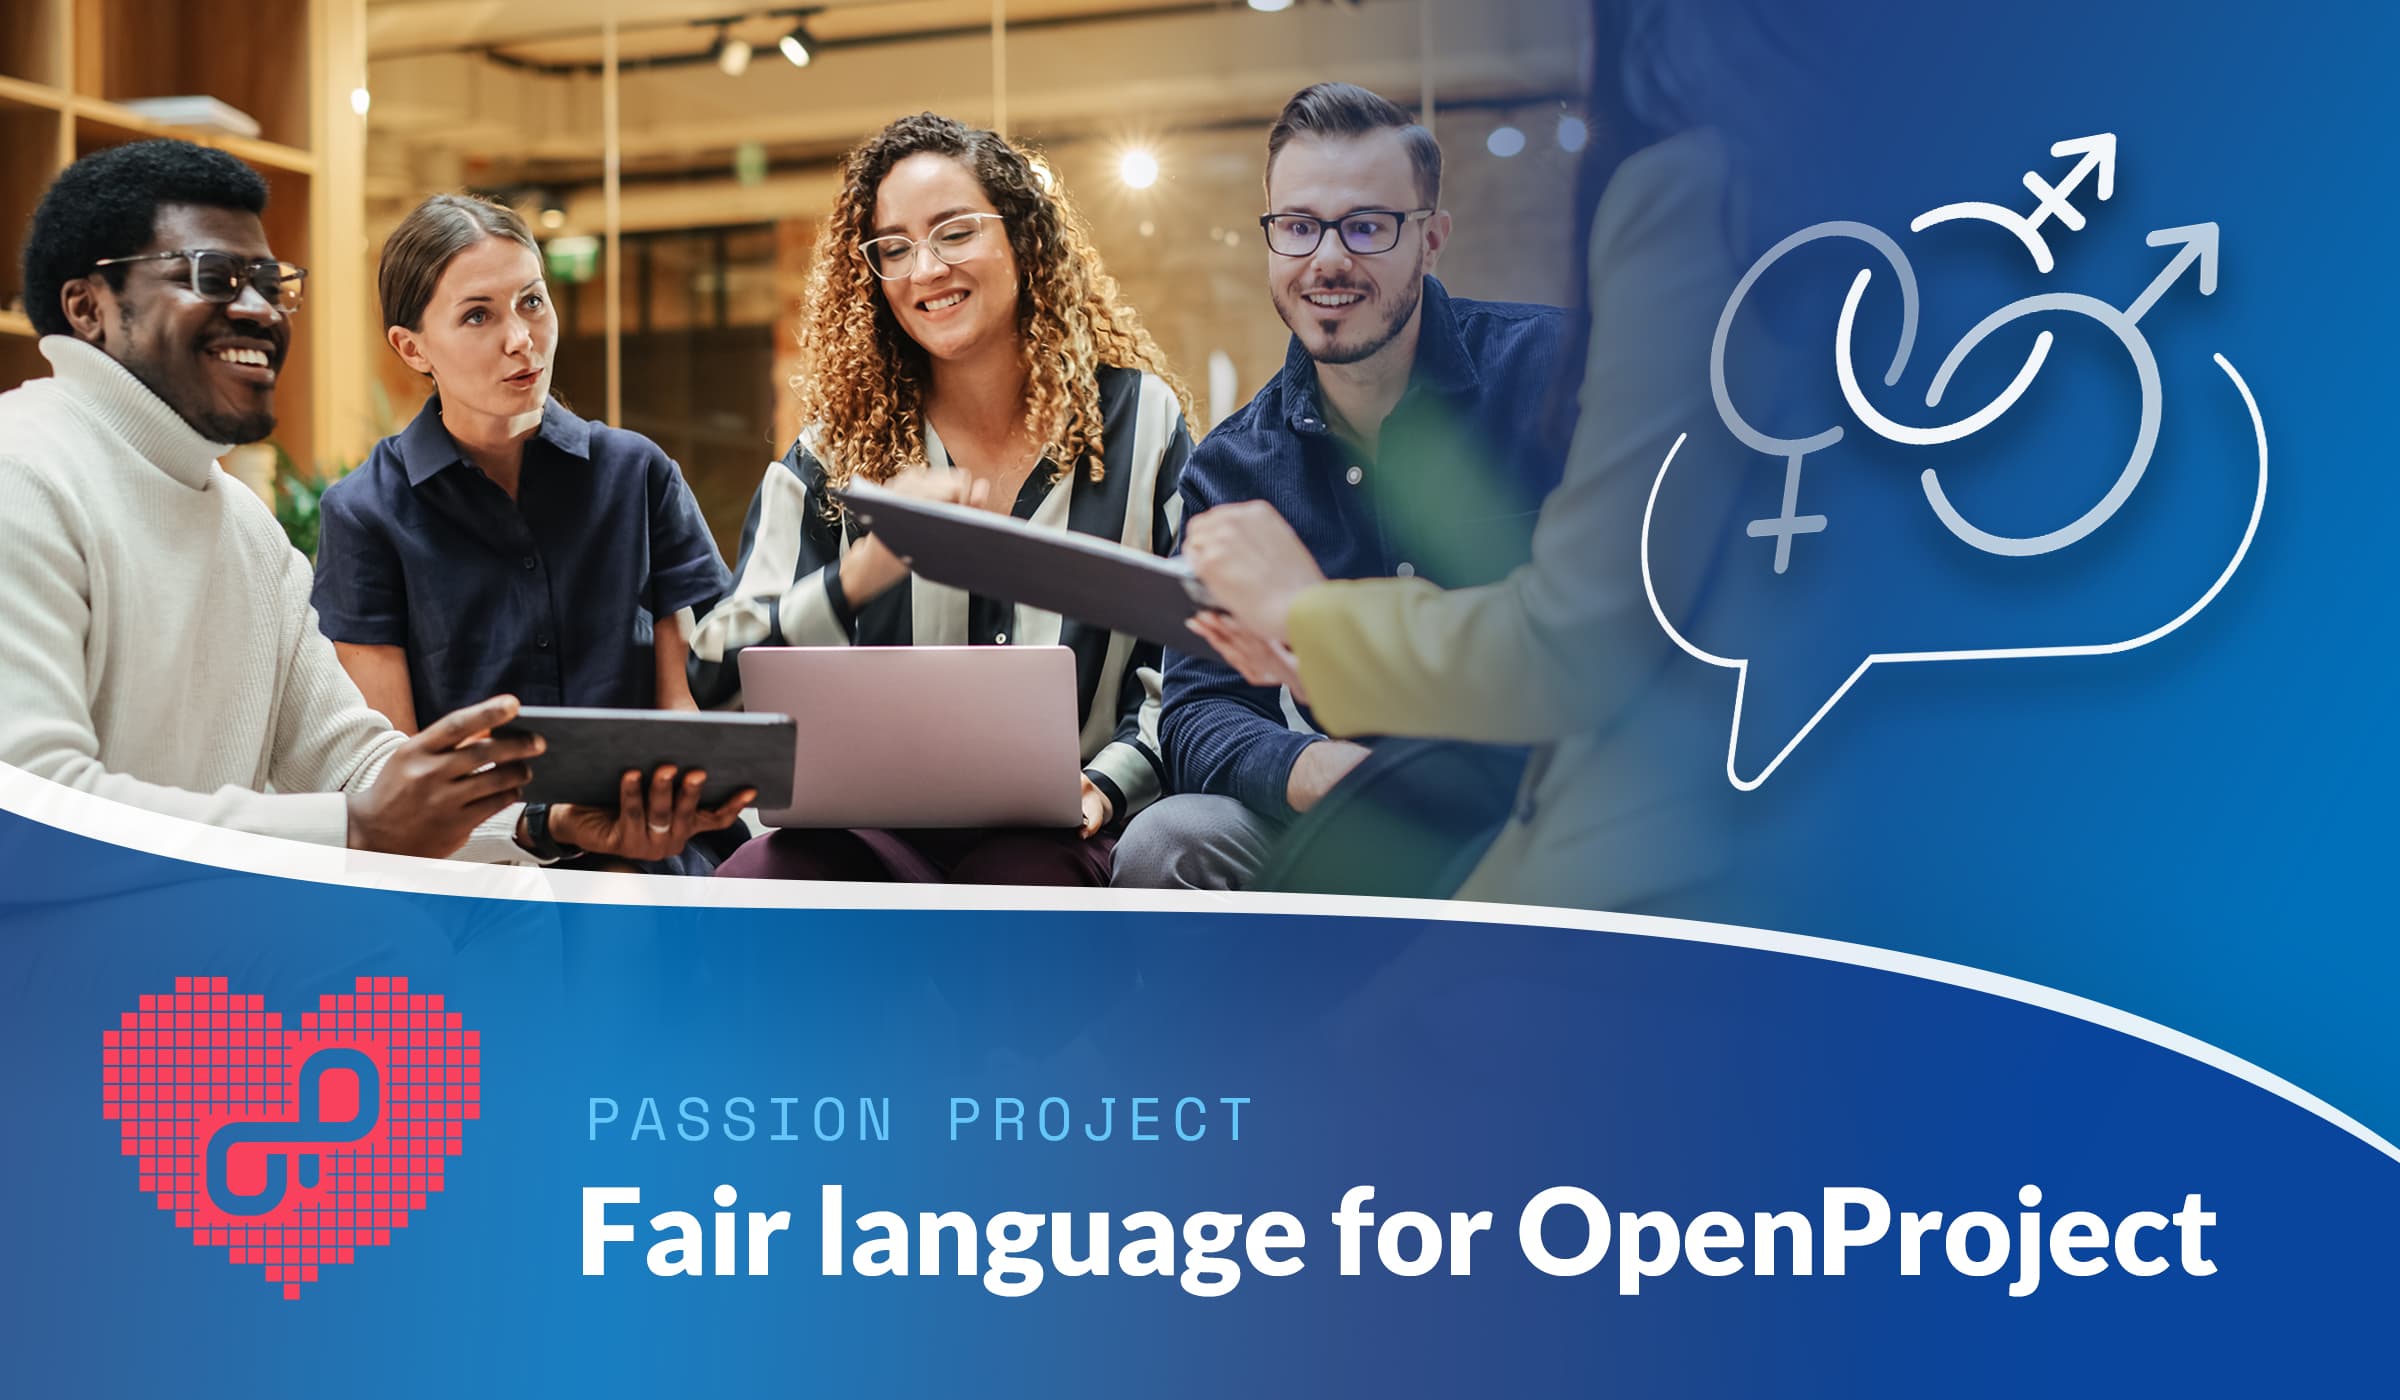 OpenProject passion project fair language